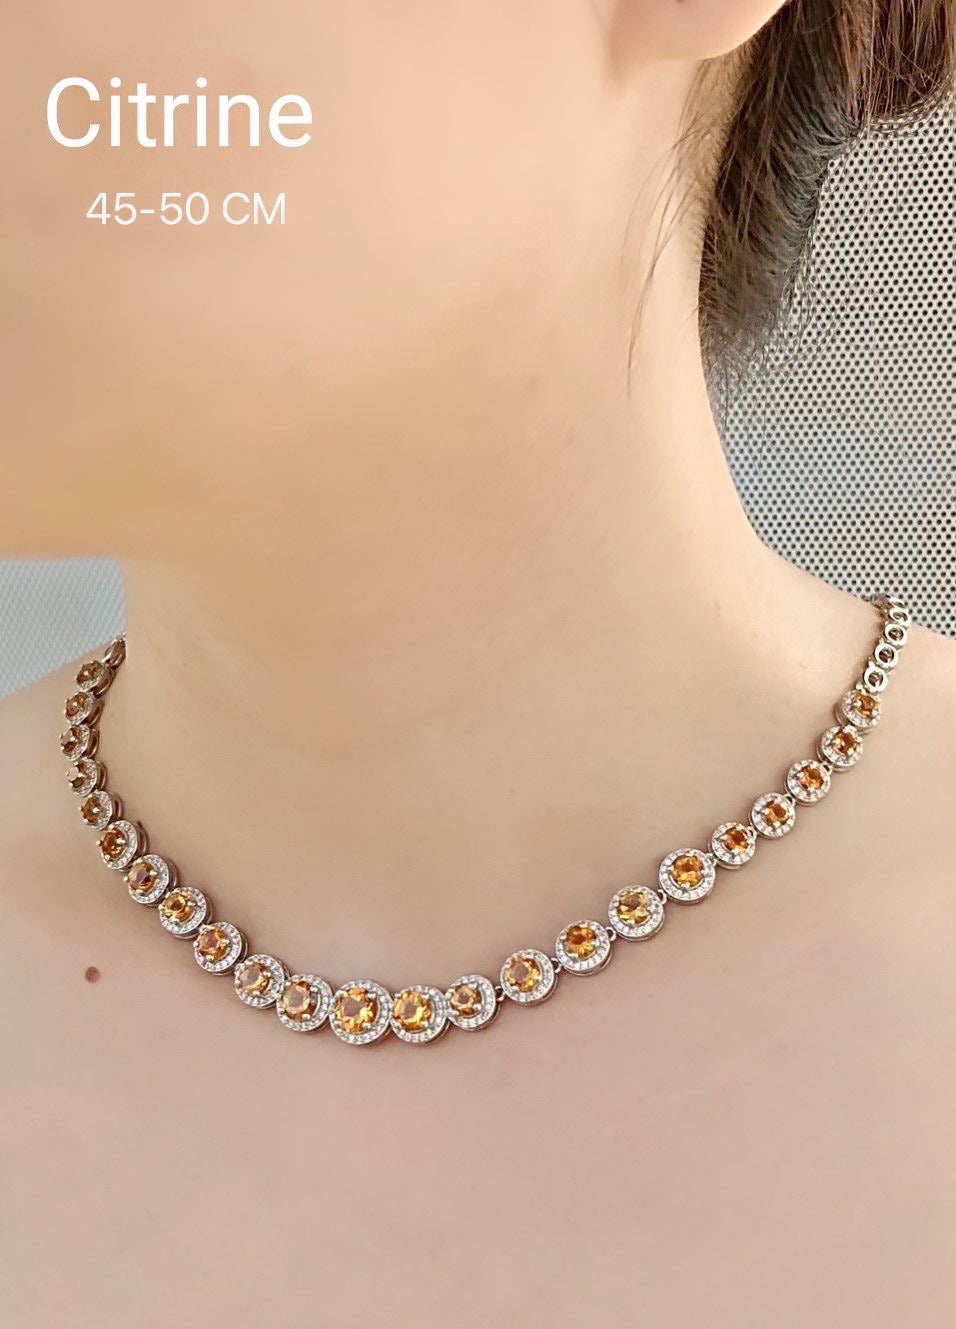 Citrine necklace